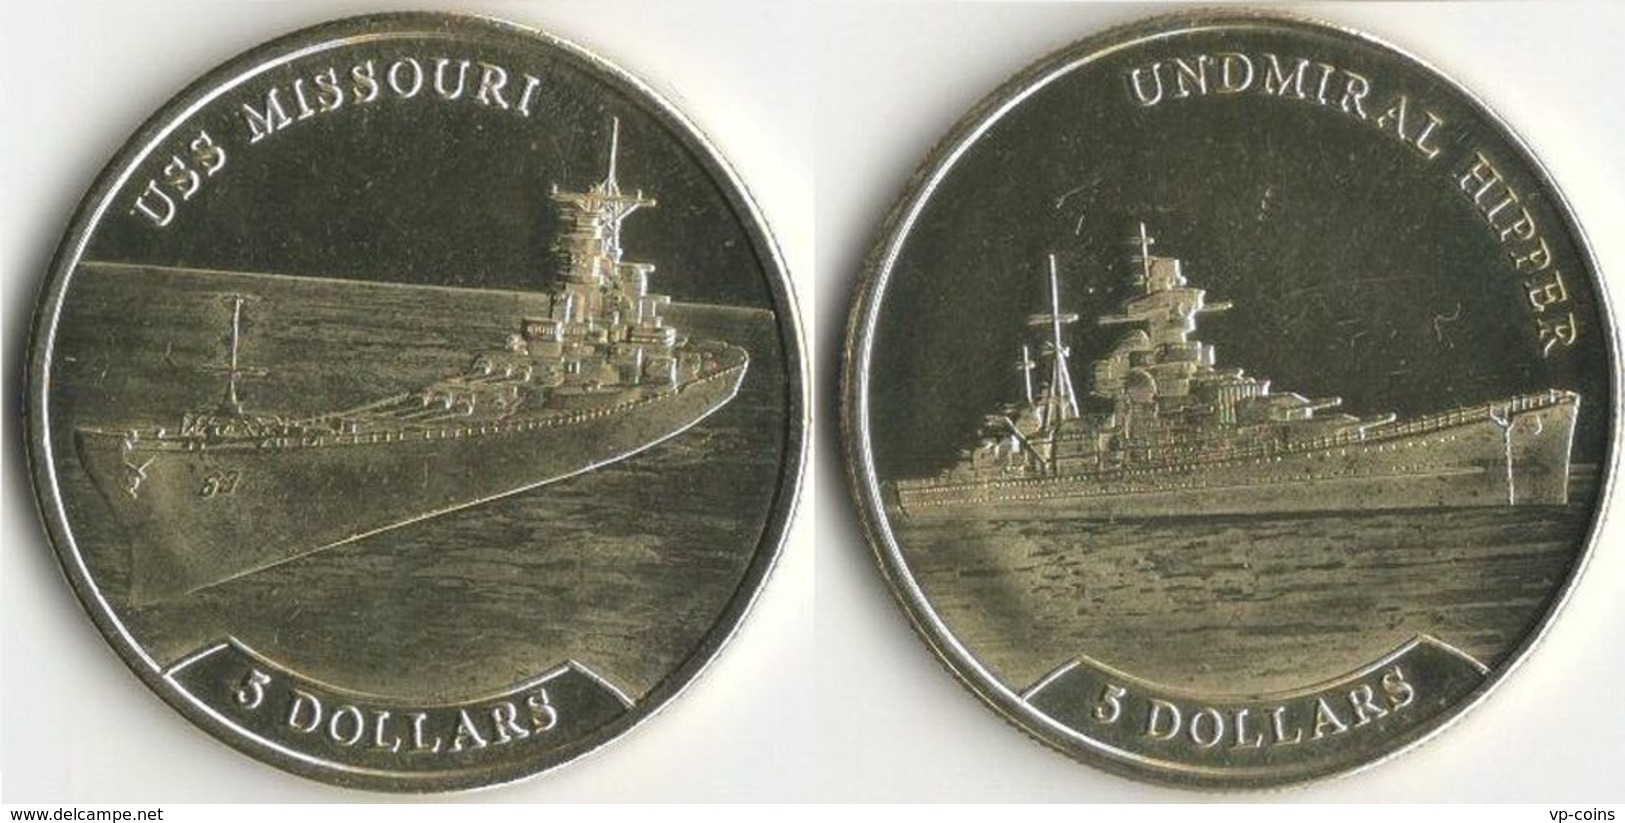 Nauru. A Set Of Coins. 5 Dollars. 2017. UNS. Ships. The Ship "Admiral Hipper" And The Battleship "Missouri" - Nauru